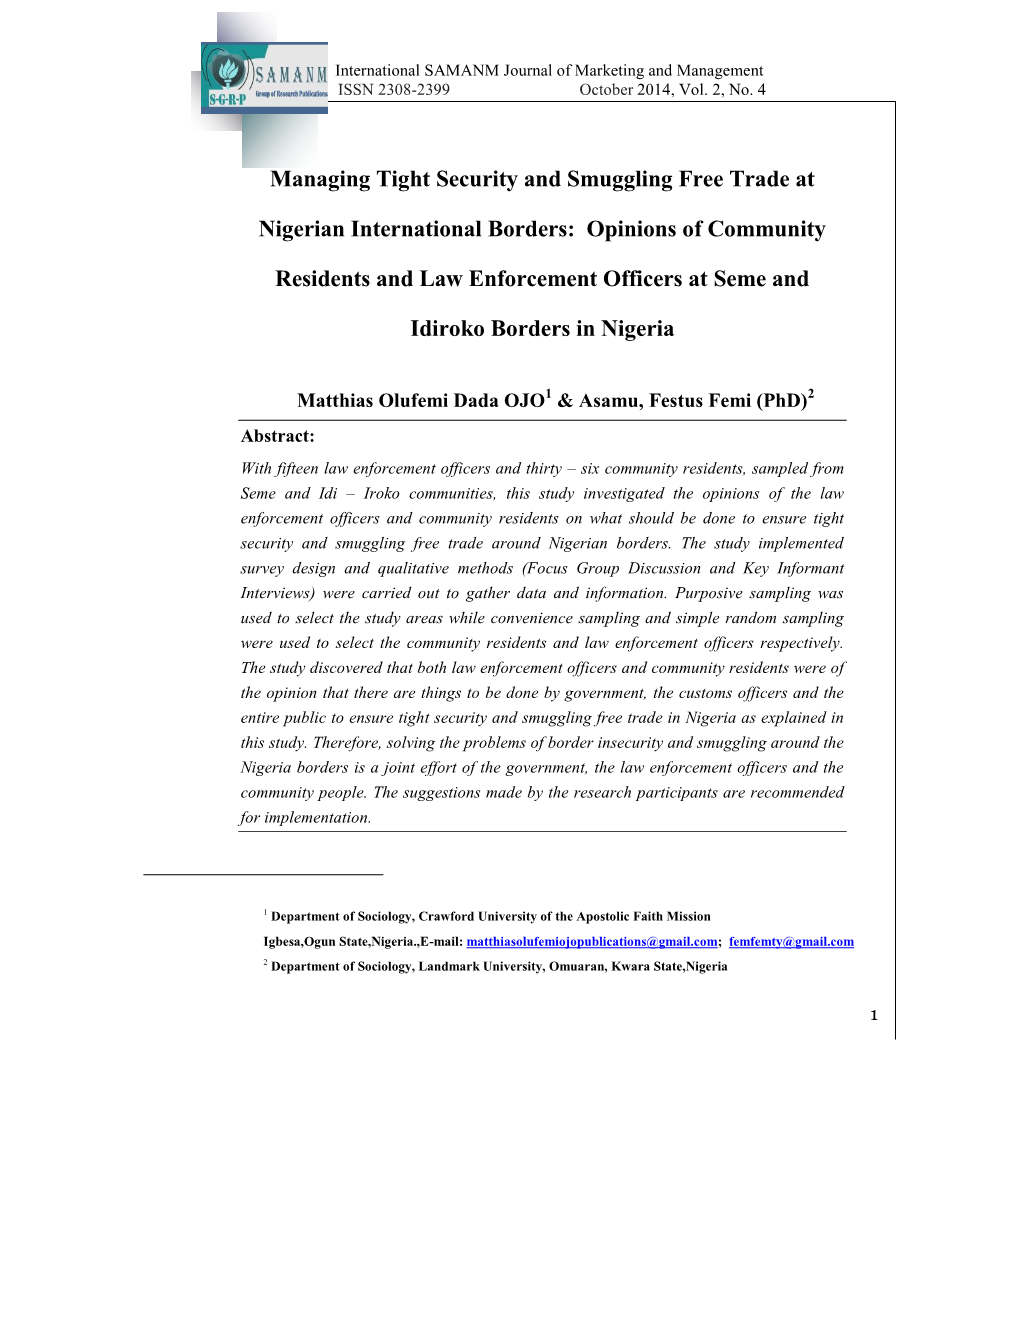 Managing Tight Security and Smuggling Free Trade at Nigerian